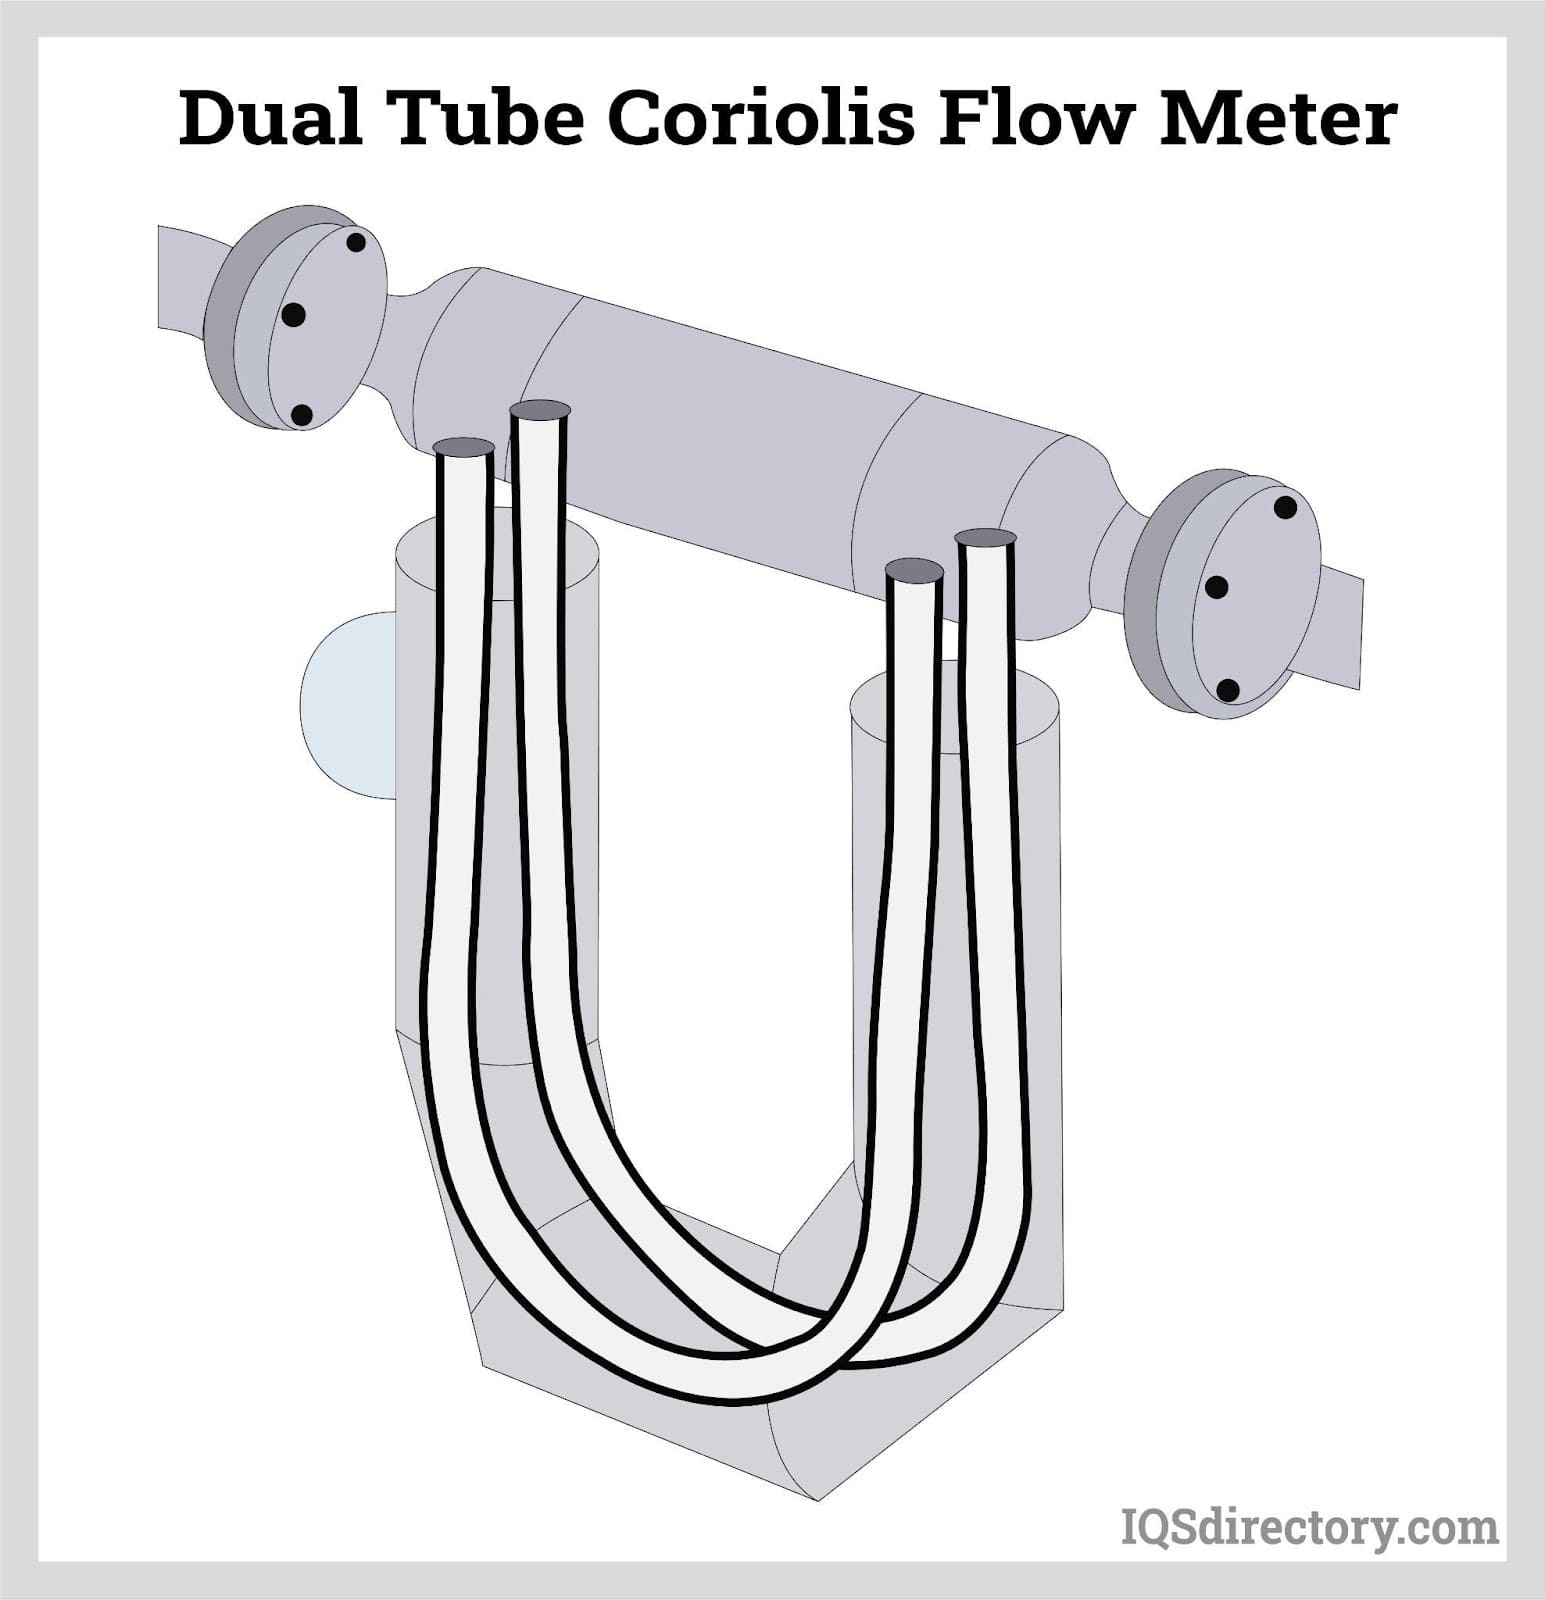 Dual Tube Coriolis Flow Meter